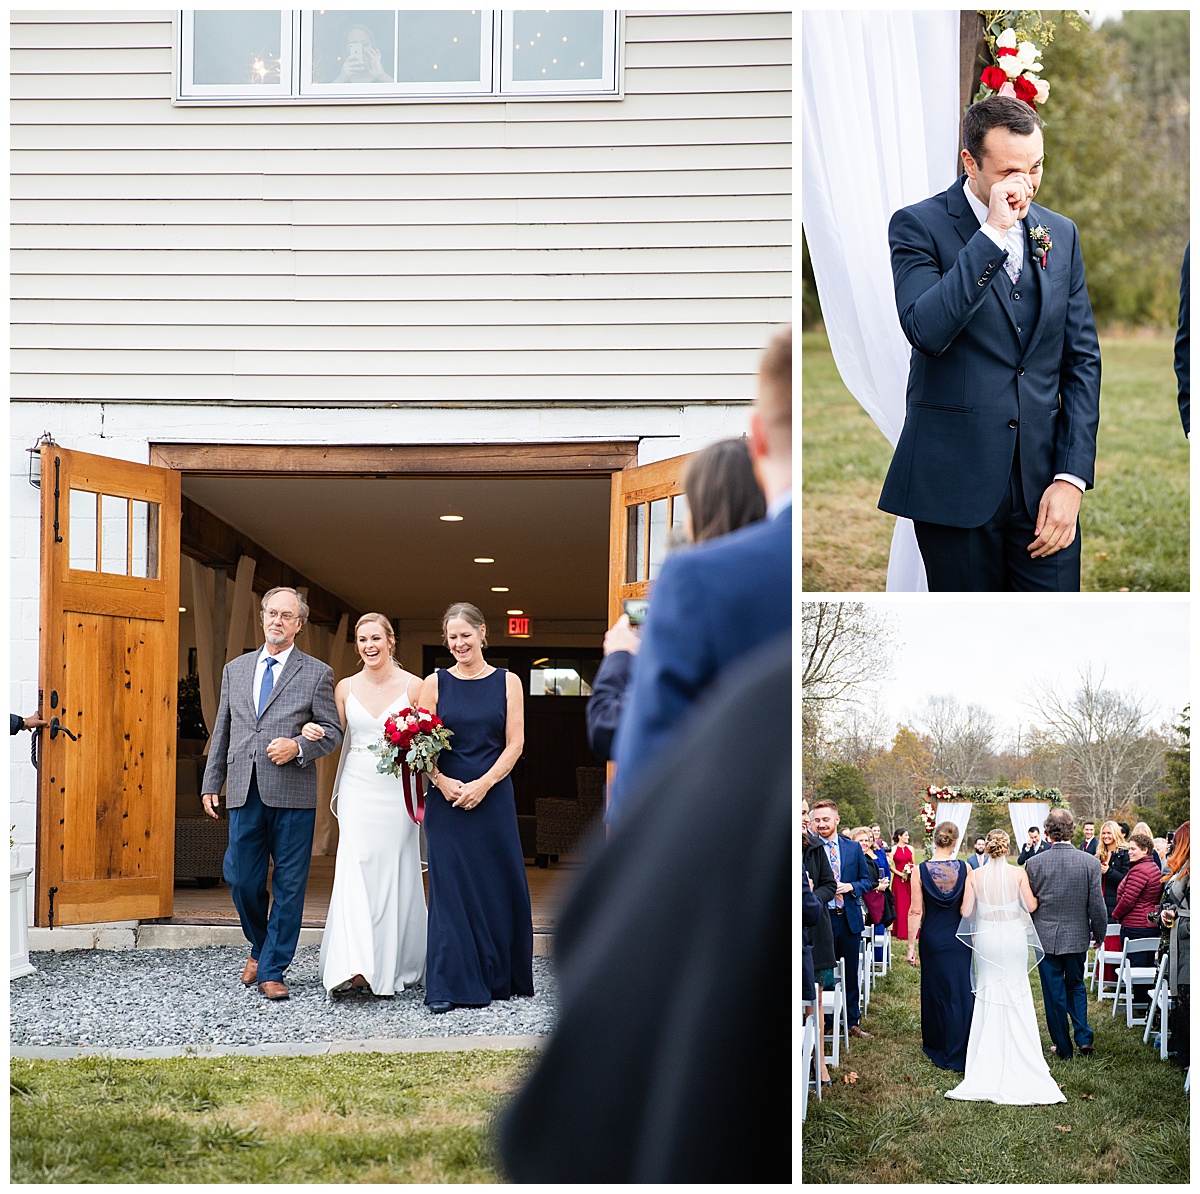 Stefanie Kamerman Photography - Victoria and David - A Rustic Barn Wedding - 48 Fields - Leesburg, VA_0031.jpg